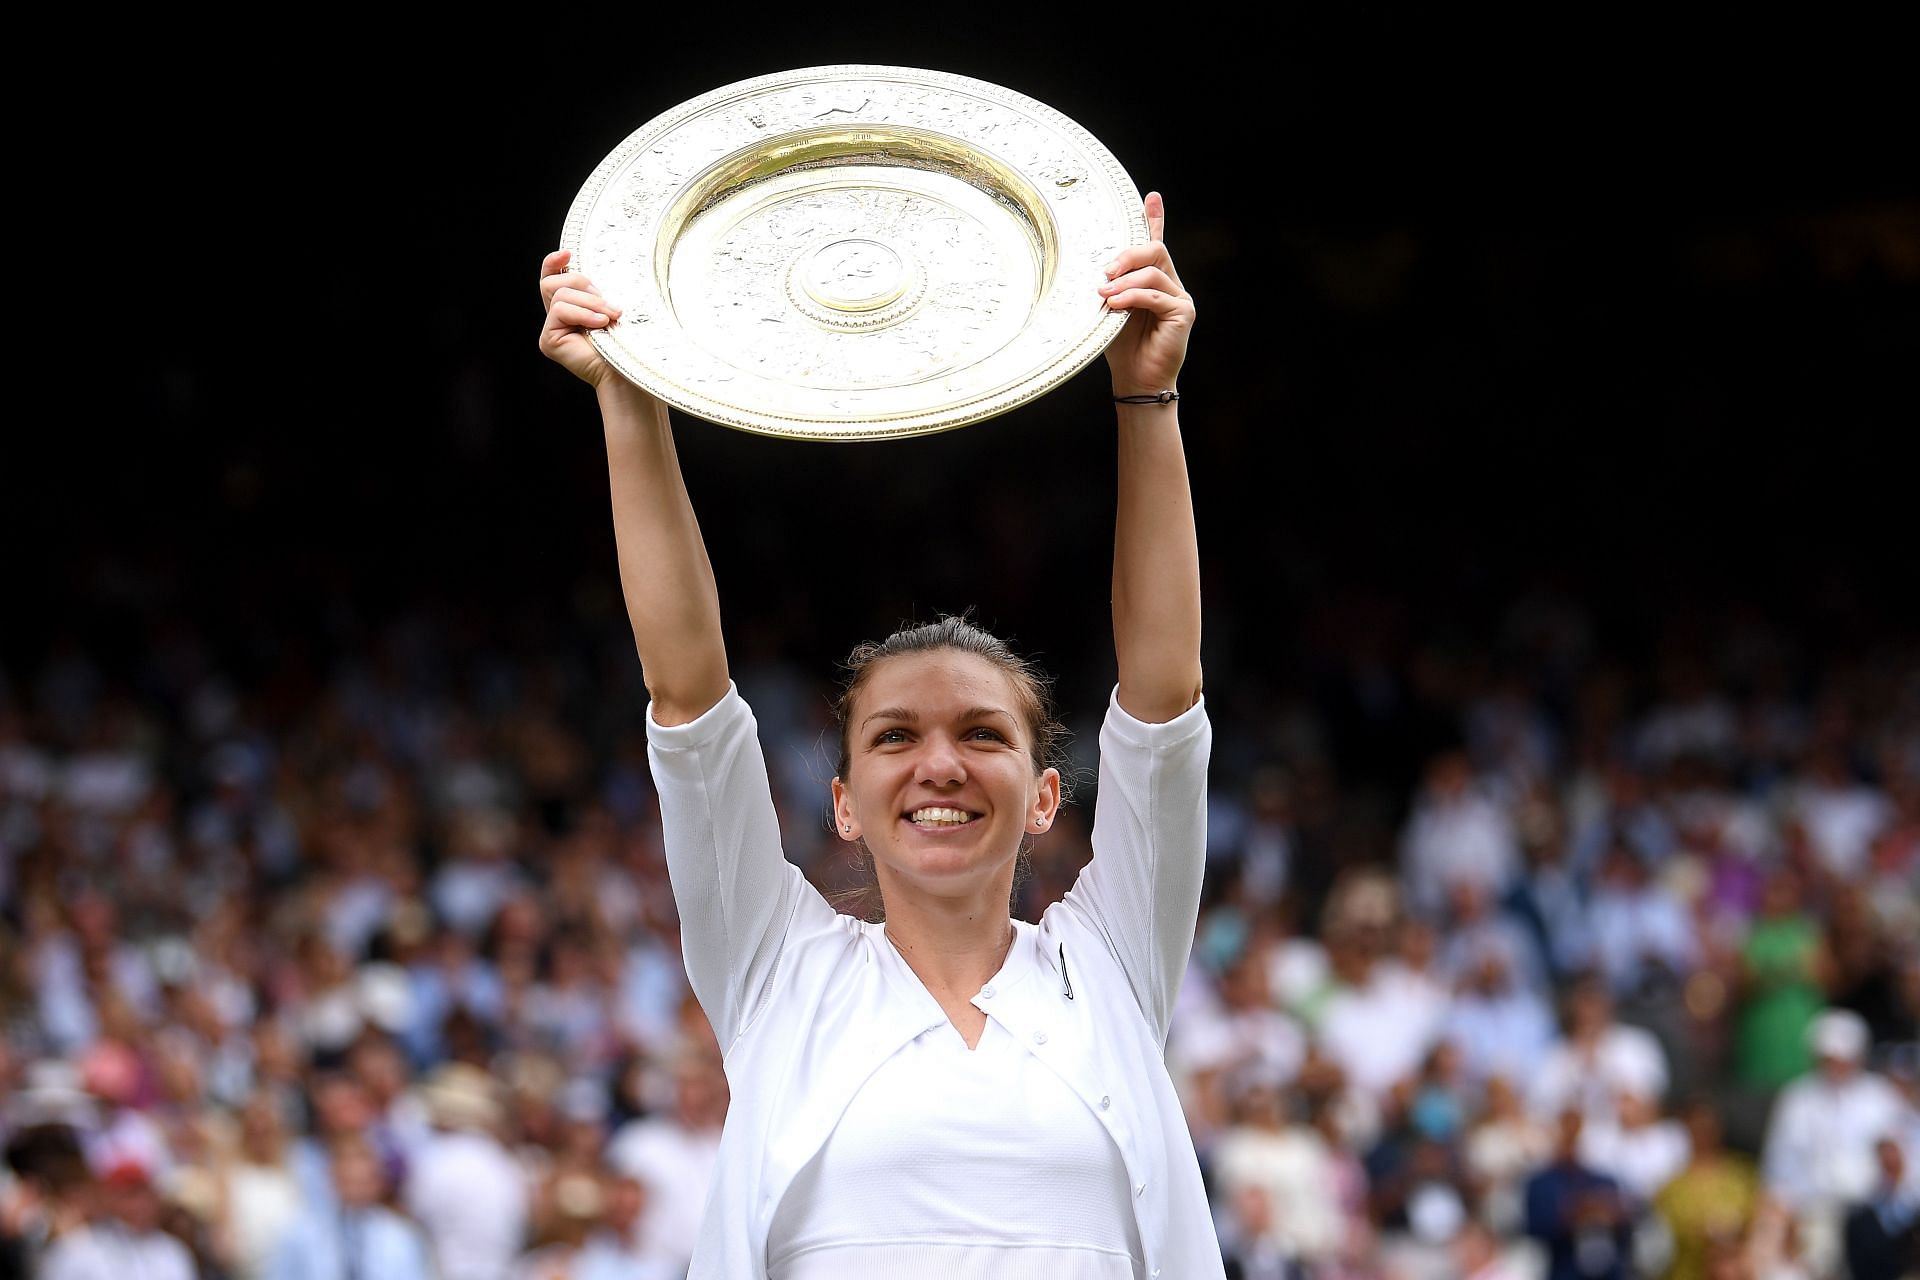 Simona Halep won the Wimbledon title in 2019.